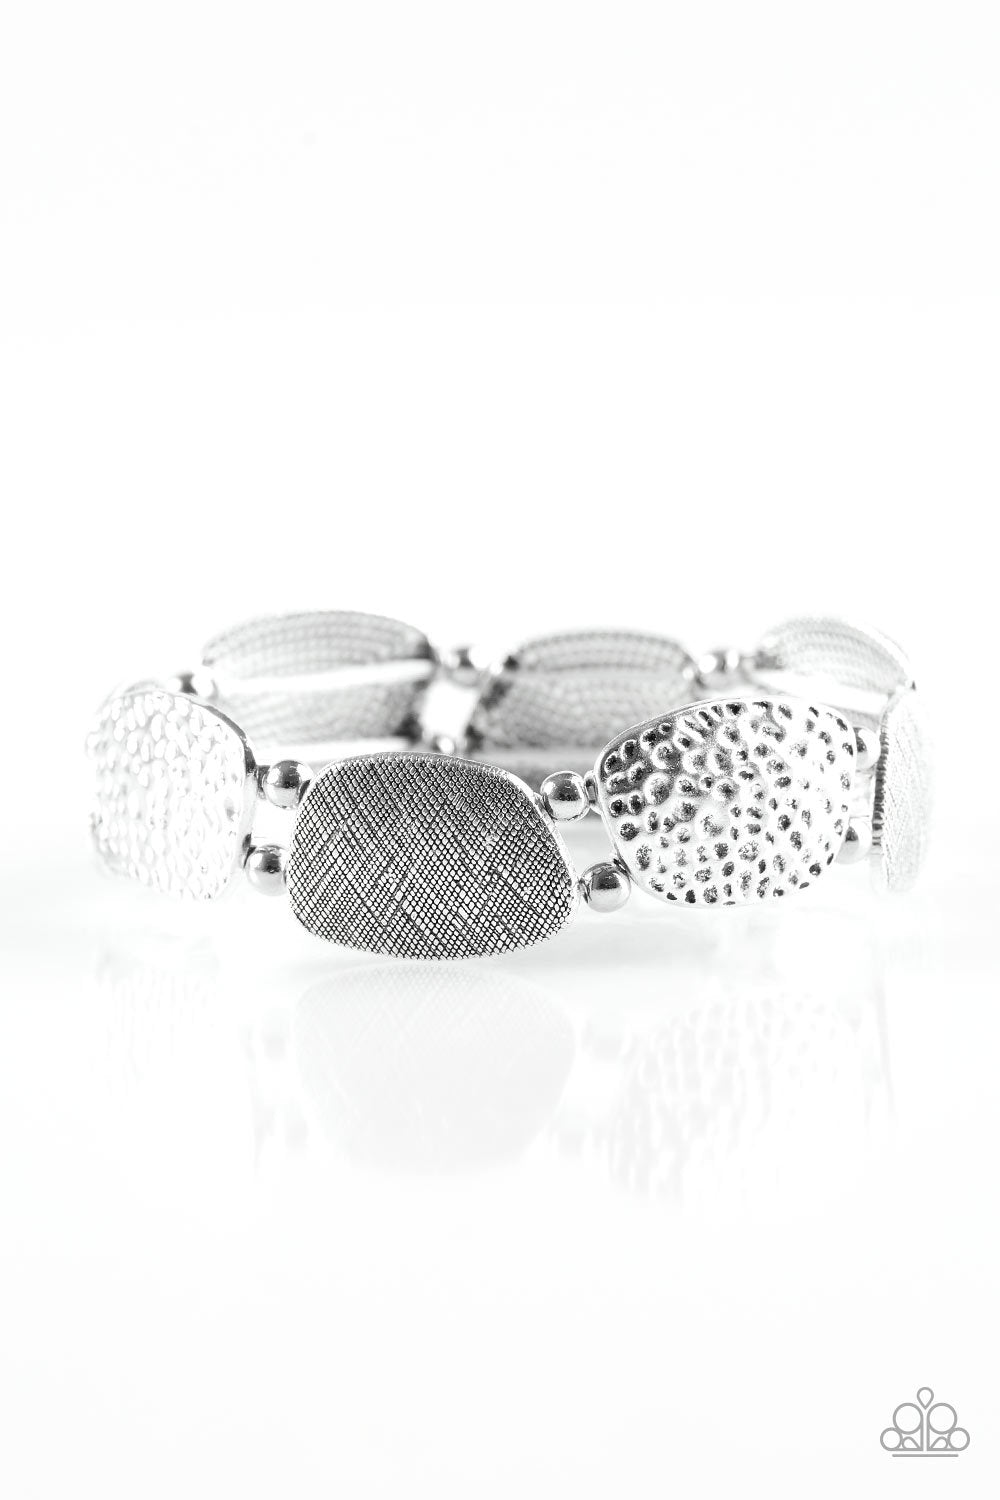 Cave Chic Silver Stretch Bracelet - Paparazzi Accessories-CarasShop.com - $5 Jewelry by Cara Jewels